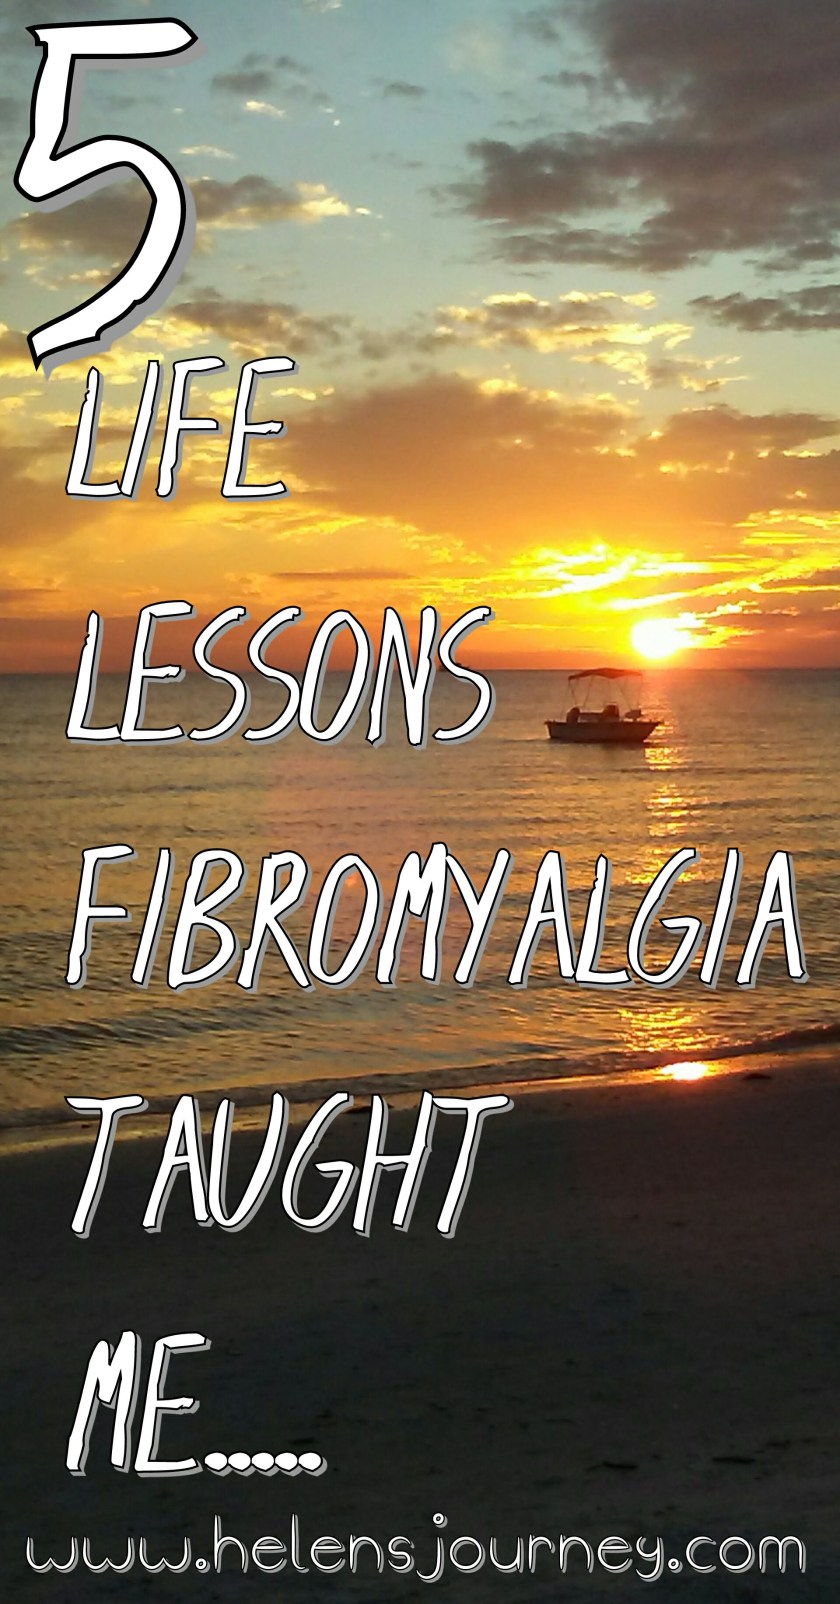 5 life lessons fibromyalgia taught me by Helen's Journey blog www.helensjourney.com